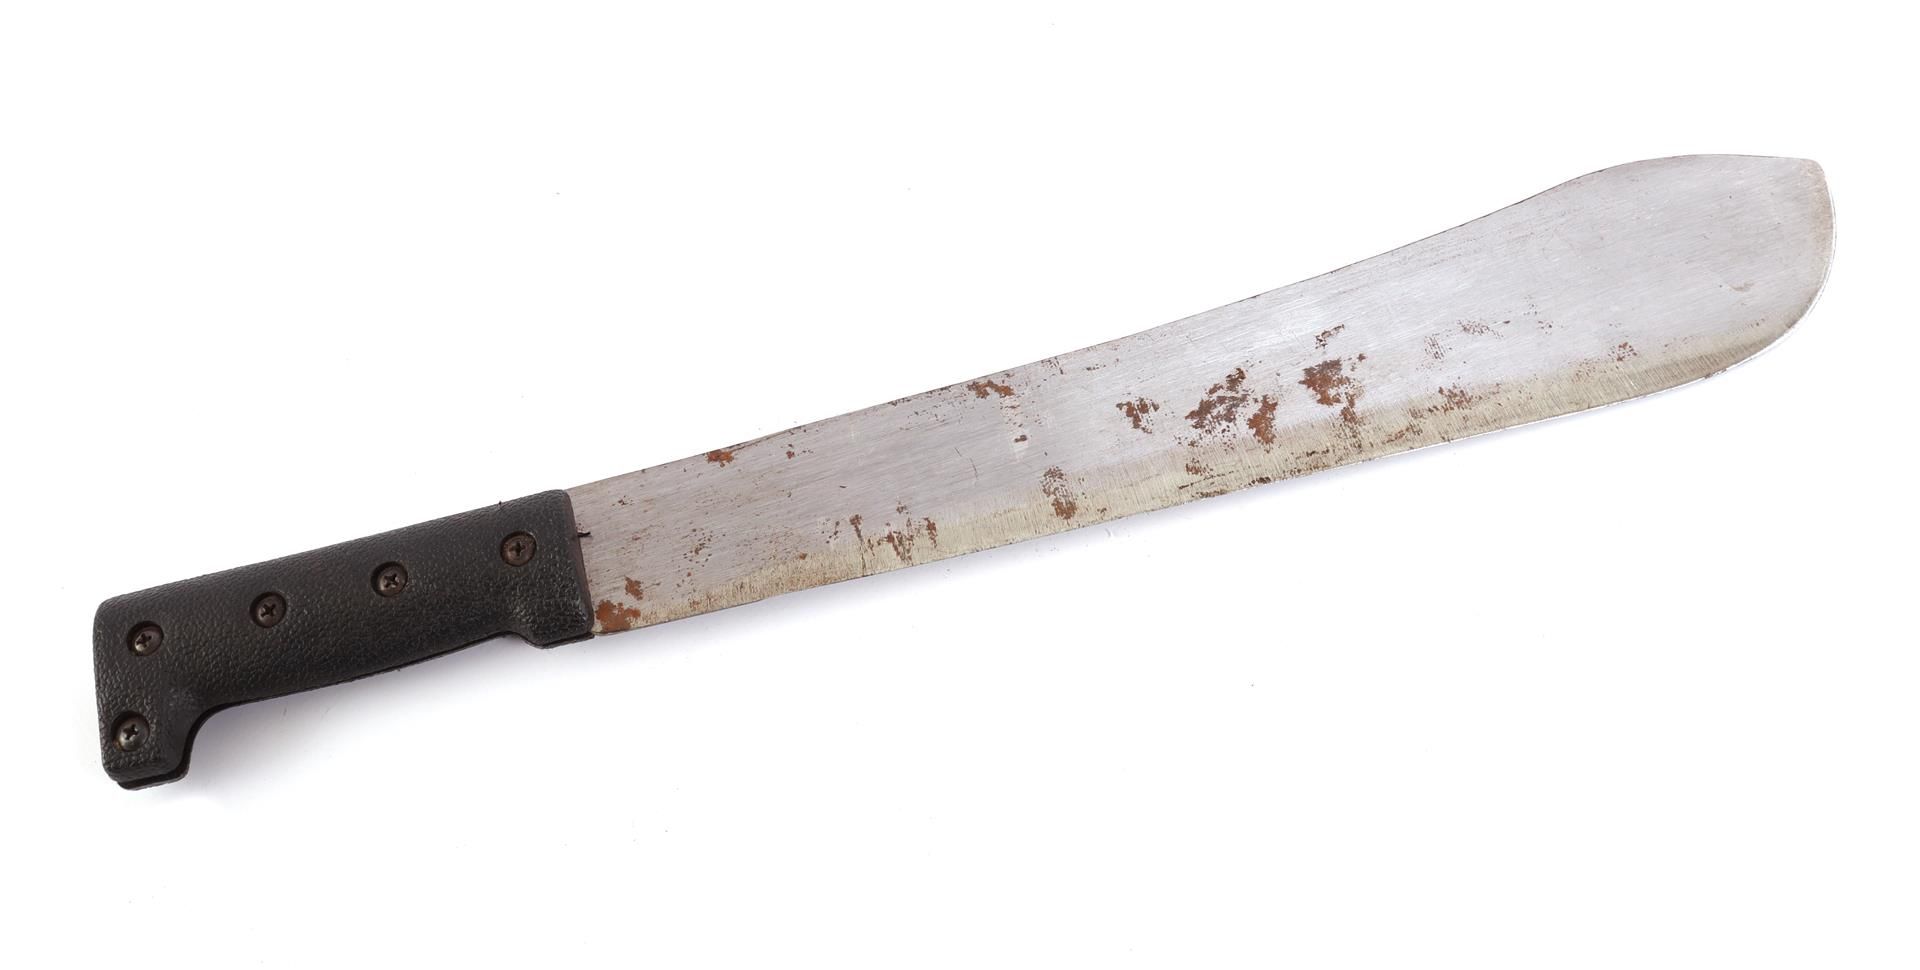 Metal American machete with plastic handle, post-war (2nd half of the 20th century). 50 cm long